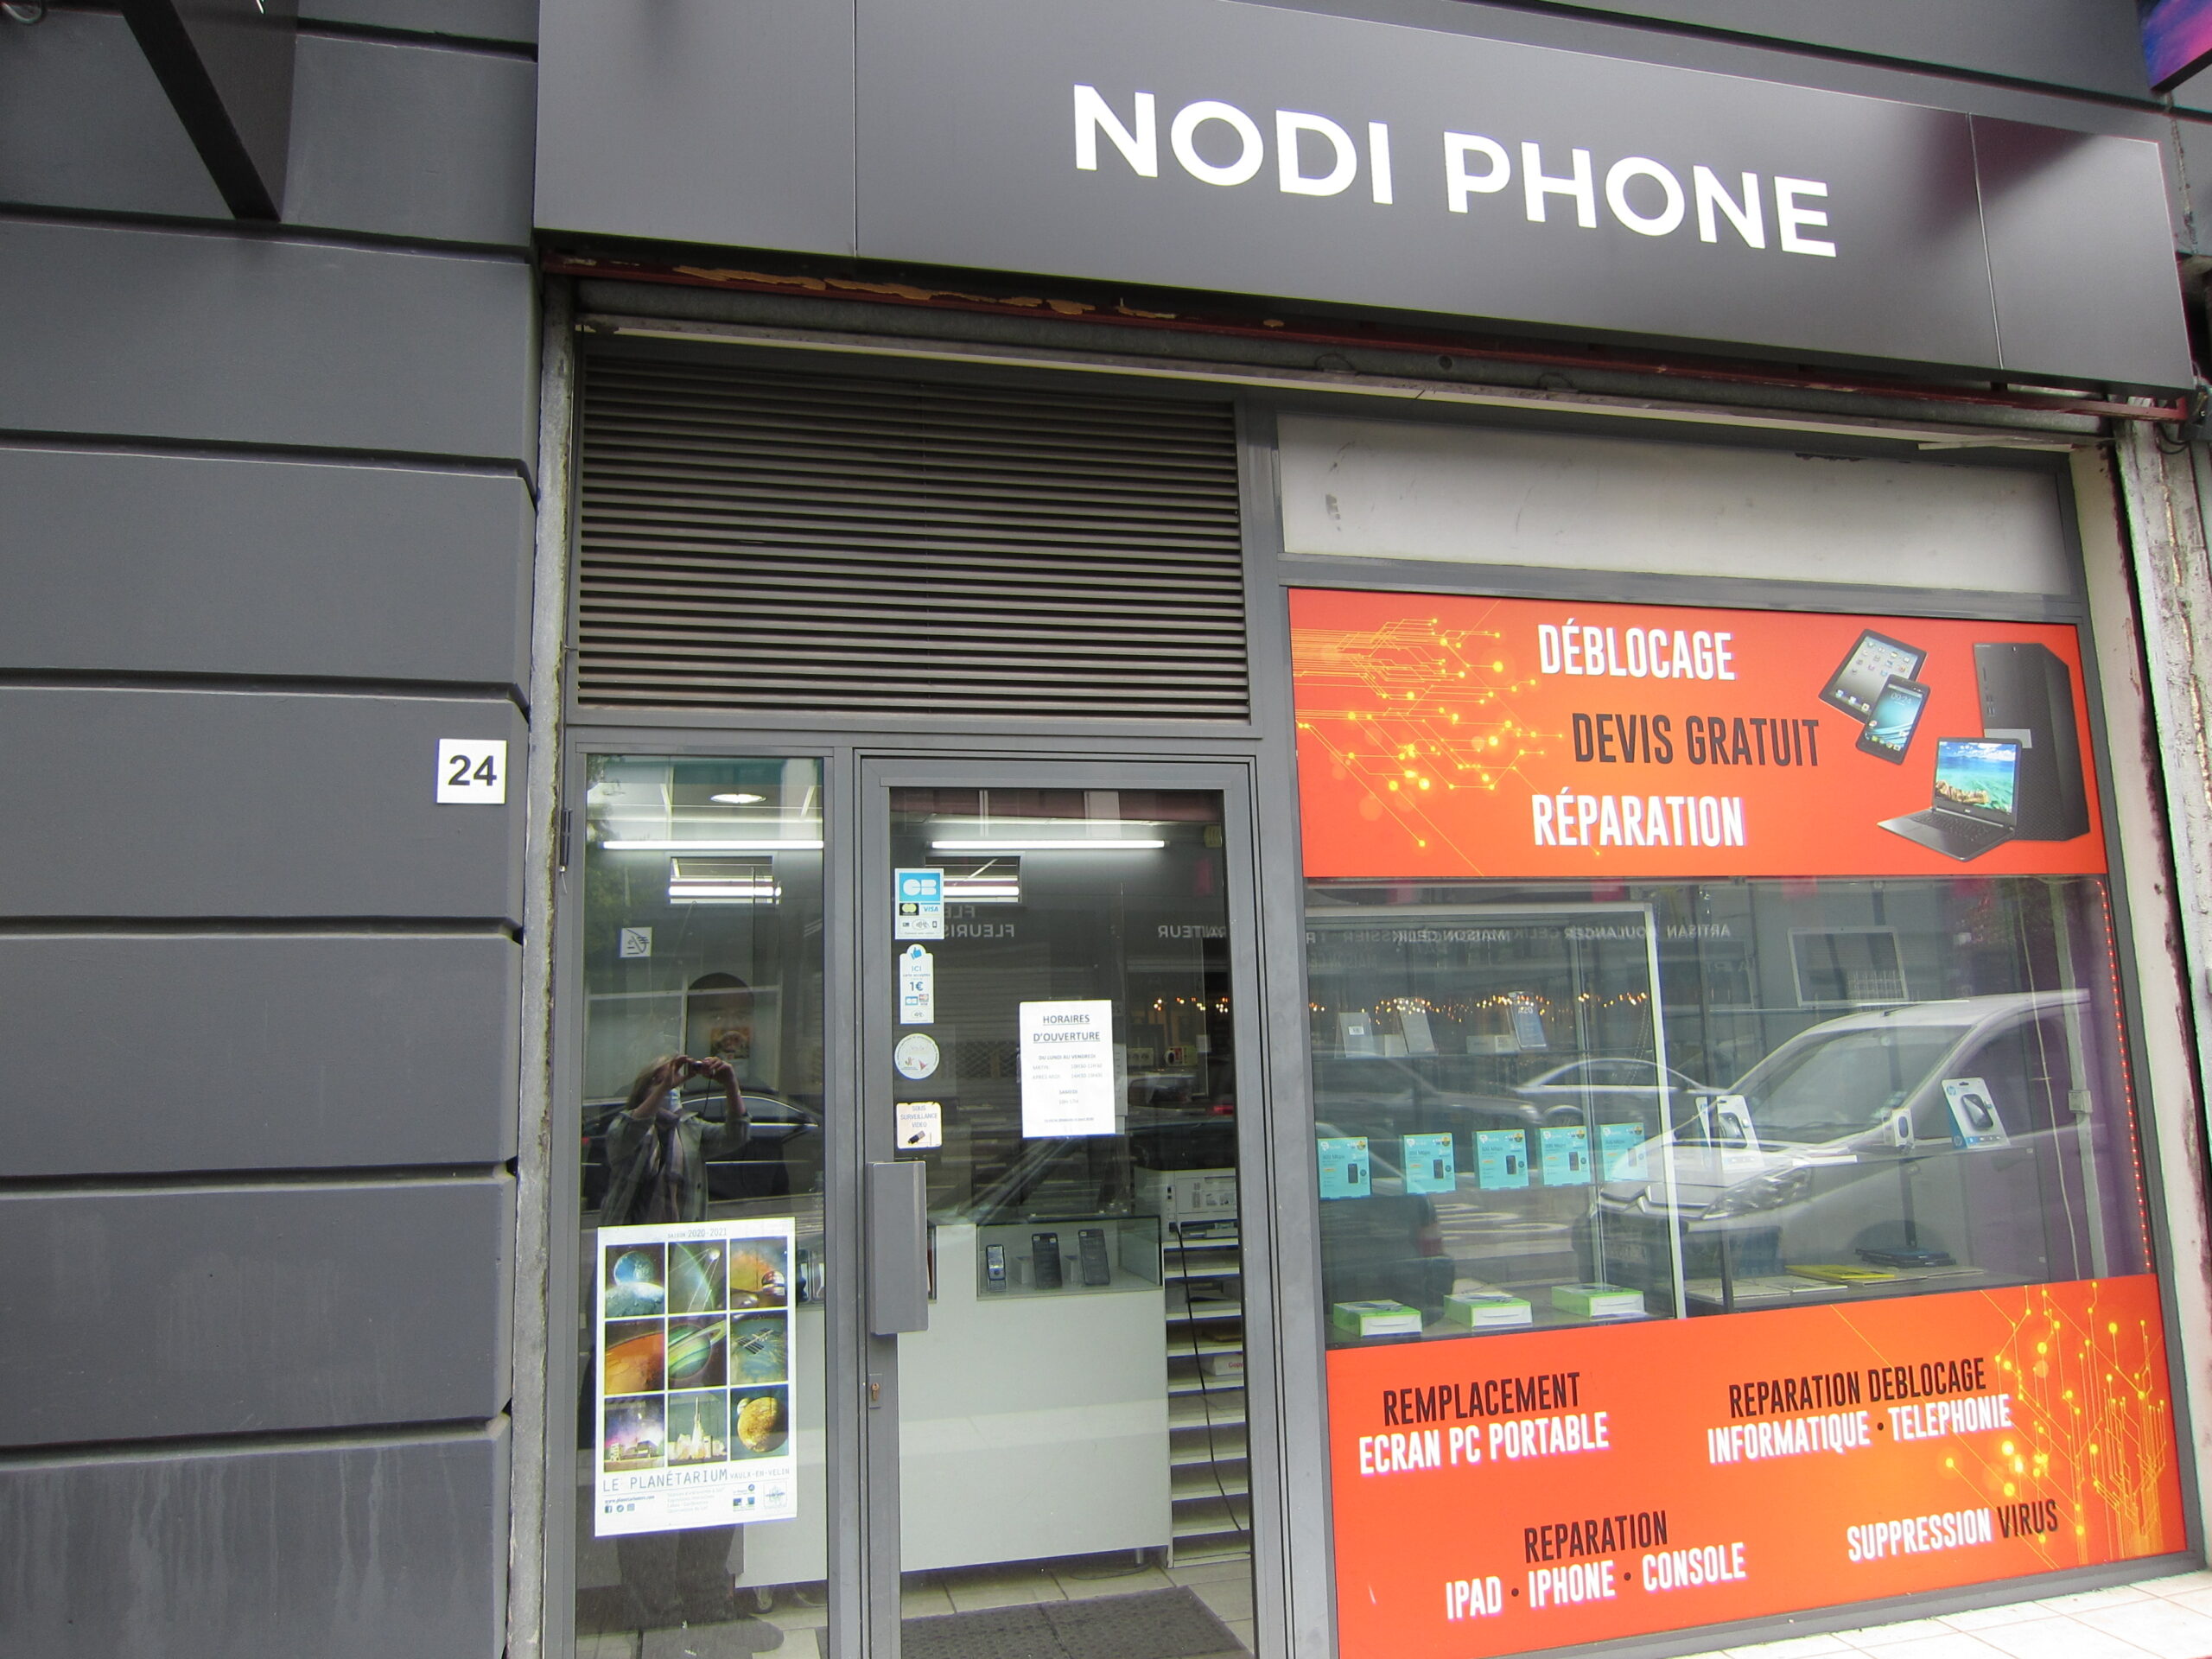 Nordi Phone